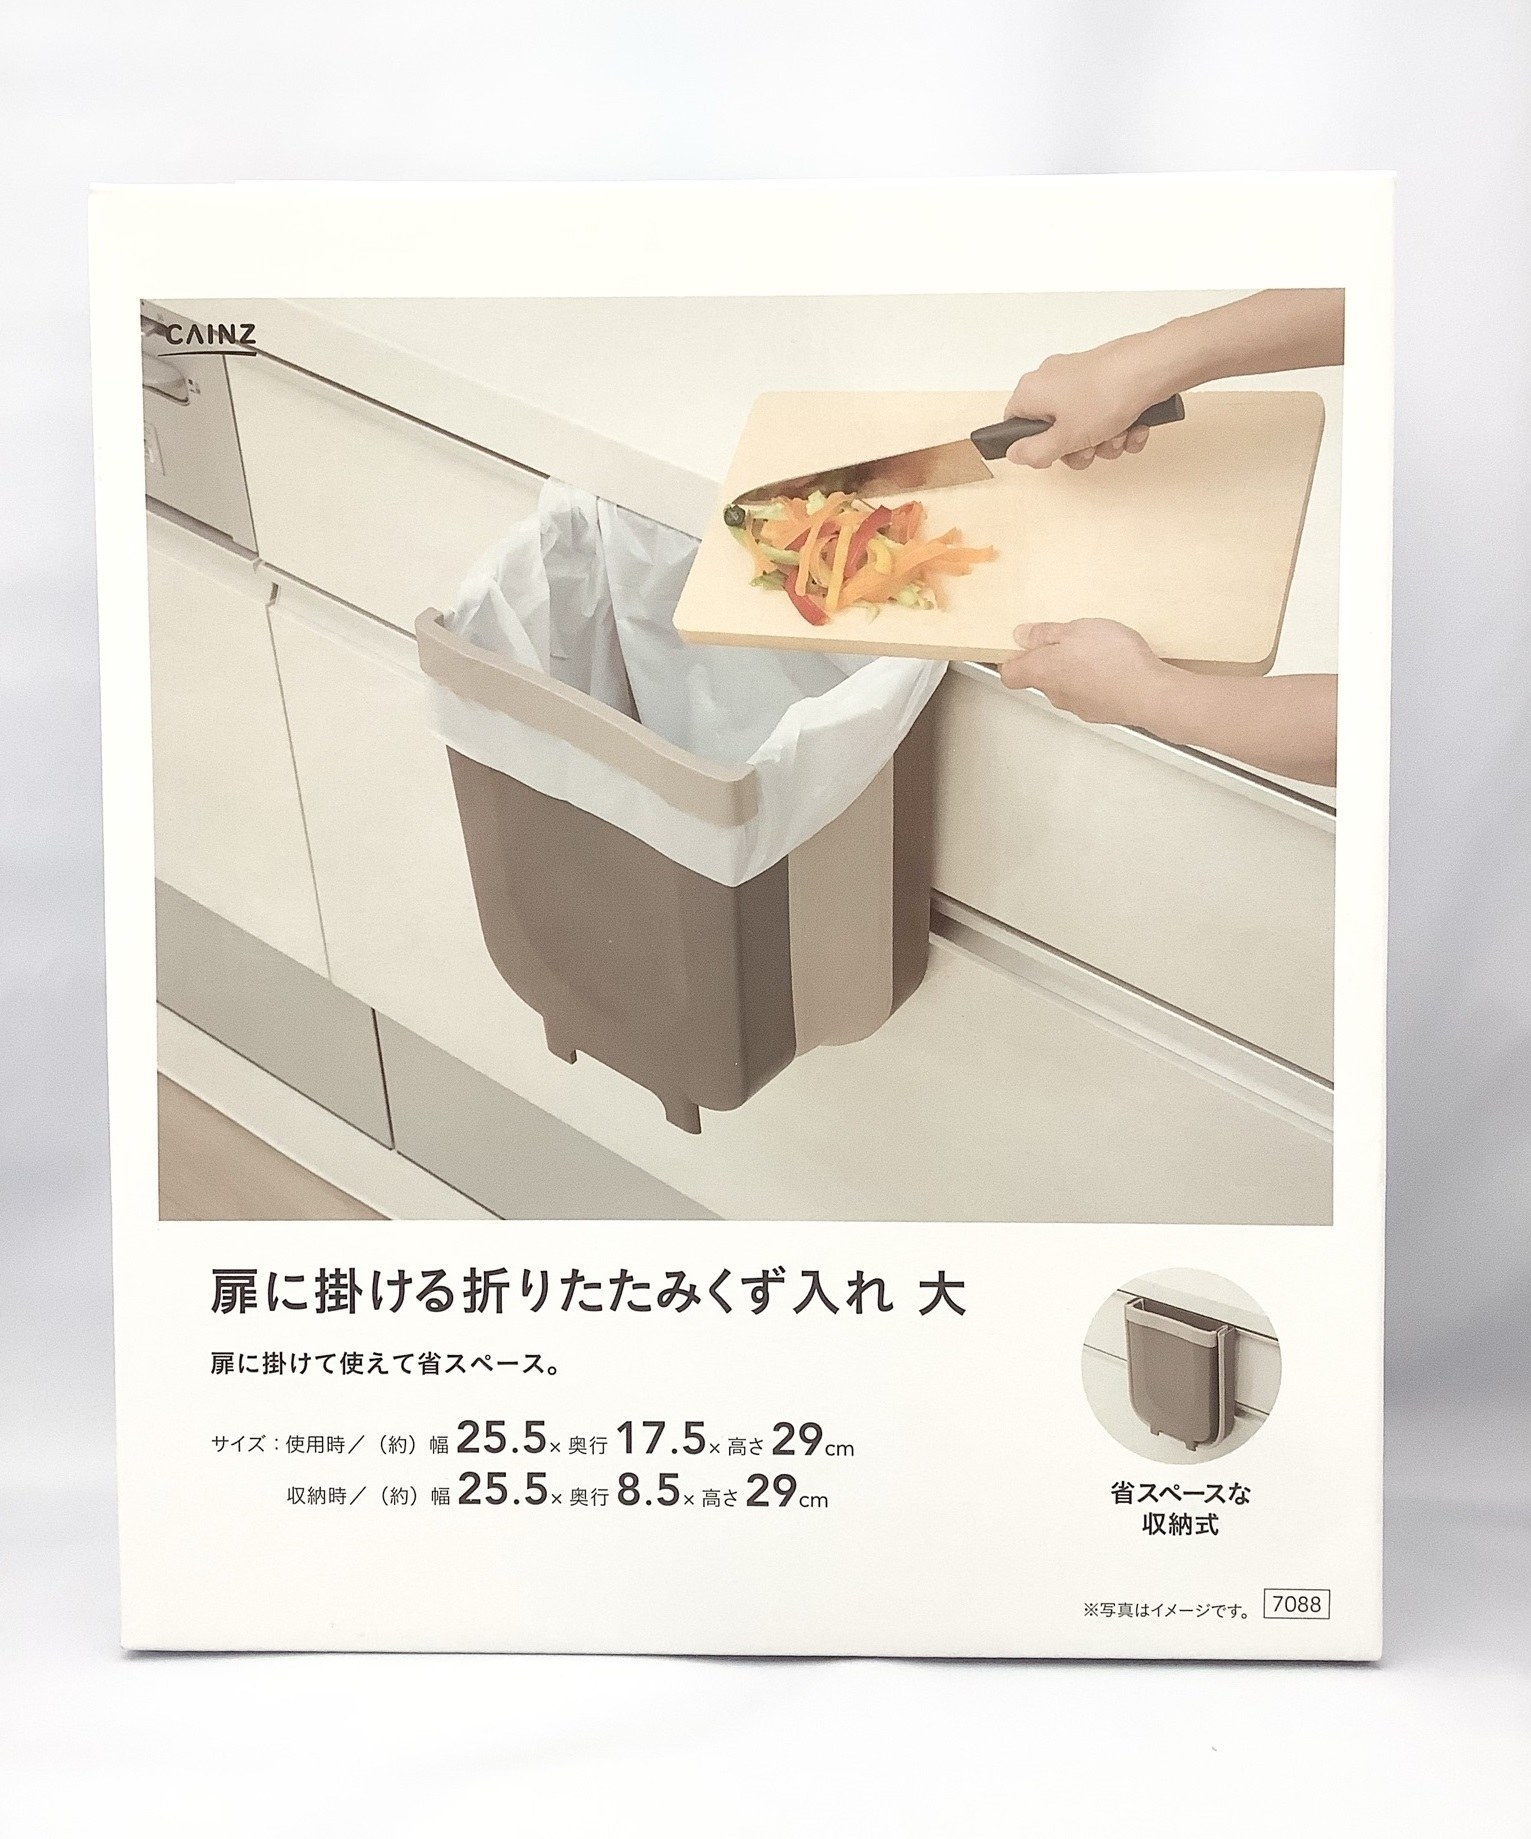 CAINZ（カインズ）の便利なおすすめキッチン用品「扉に掛ける折りたたみくず入れ 大」省スペースで大人気のゴミ箱